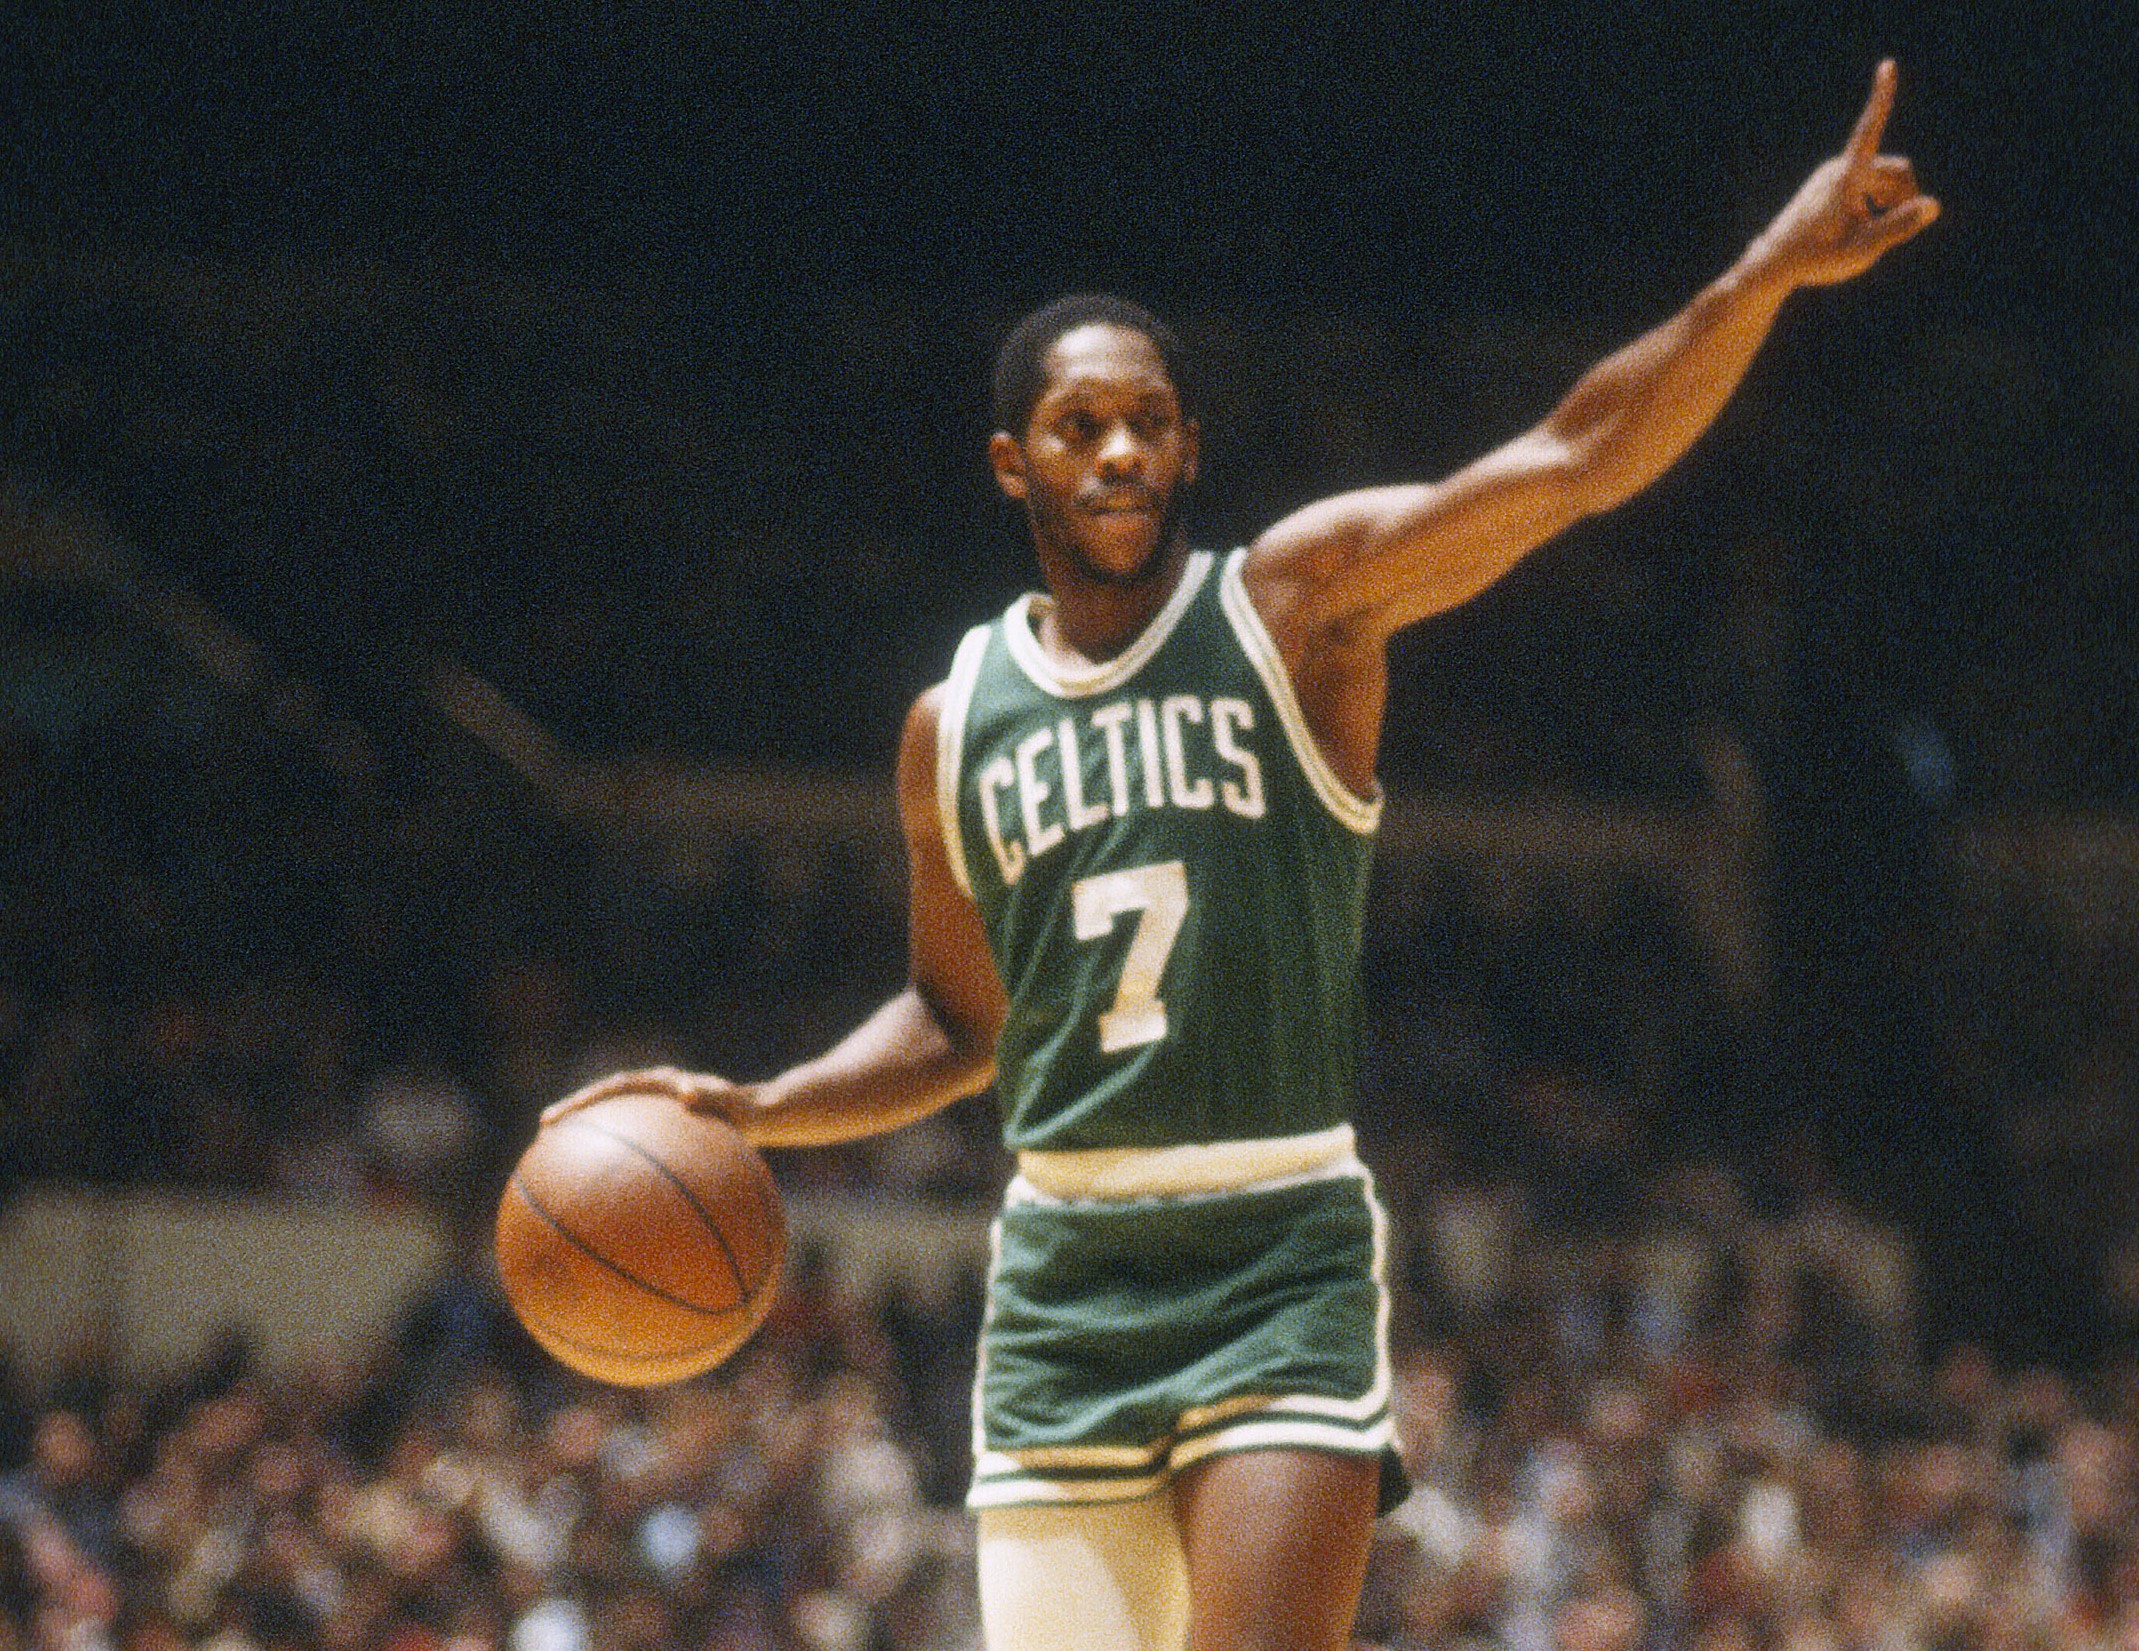 Nate Archibald of the Boston Celtics dribbles the ball during an NBA game circa 1979.